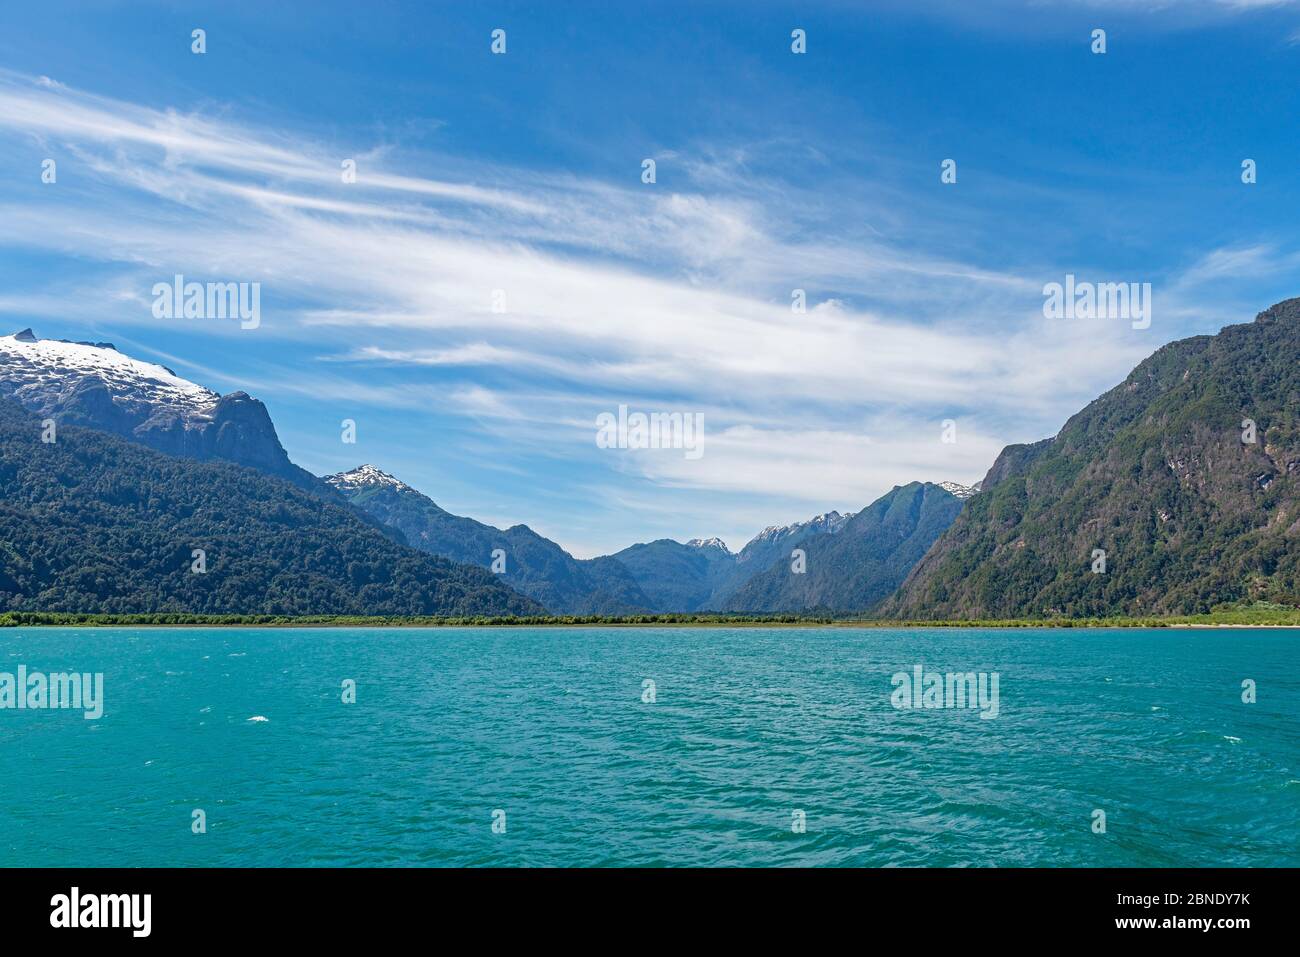 Lago All Saints (Lago Todos los Santos) nel Distretto dei Laghi cileno vicino a Puerto Varas e Puerto Montt, Cile. Foto Stock